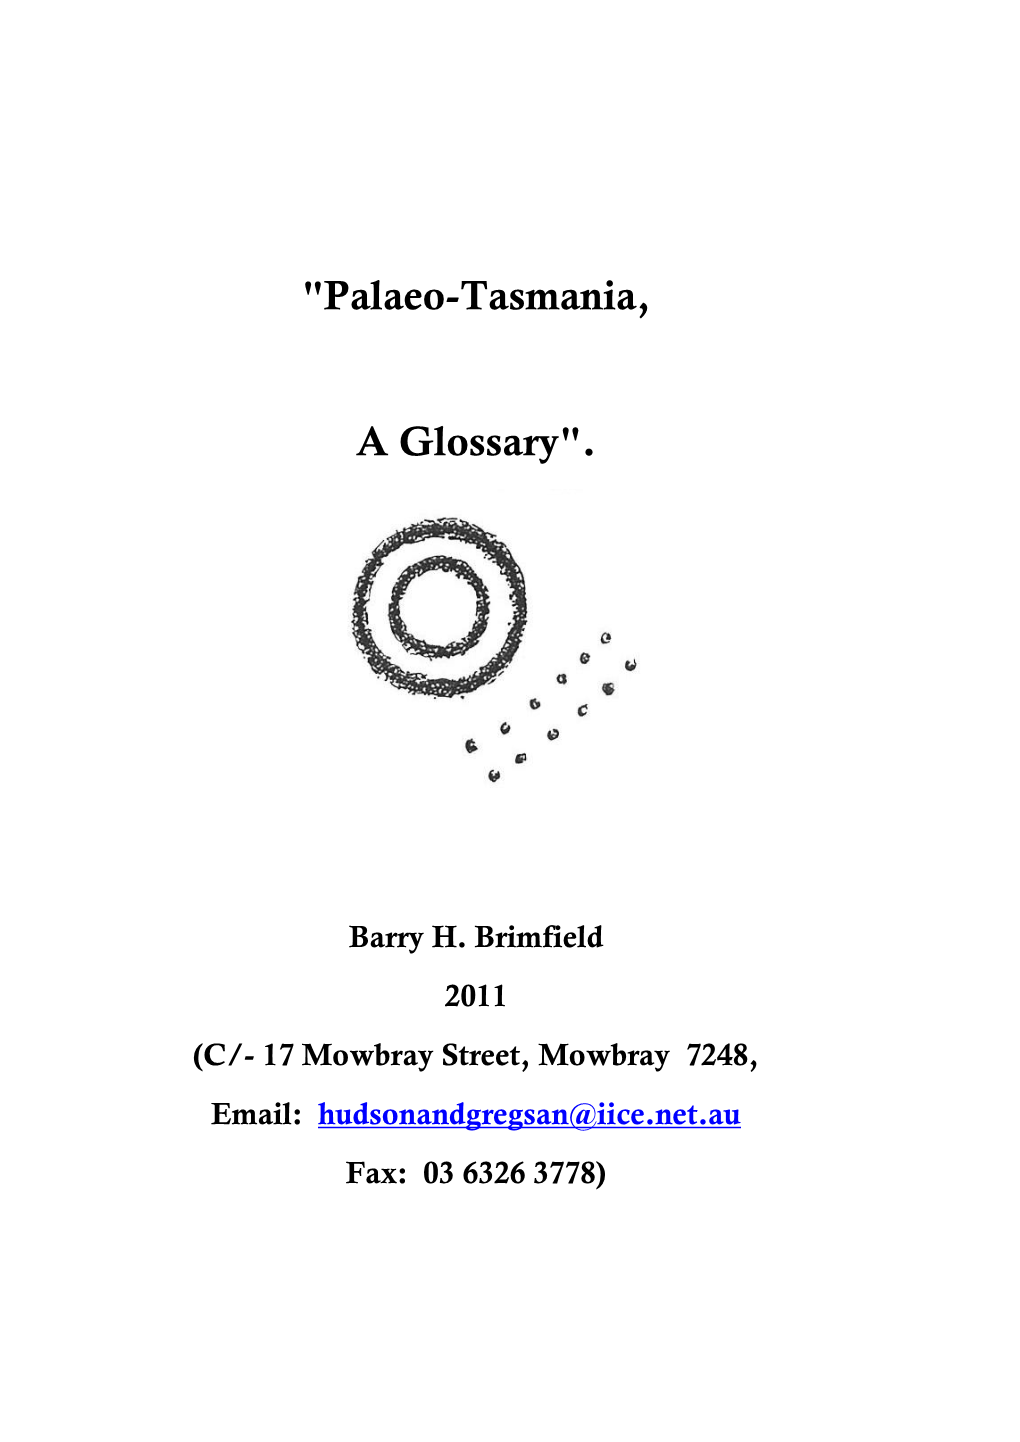 "Palaeo-Tasmania, a Glossary"